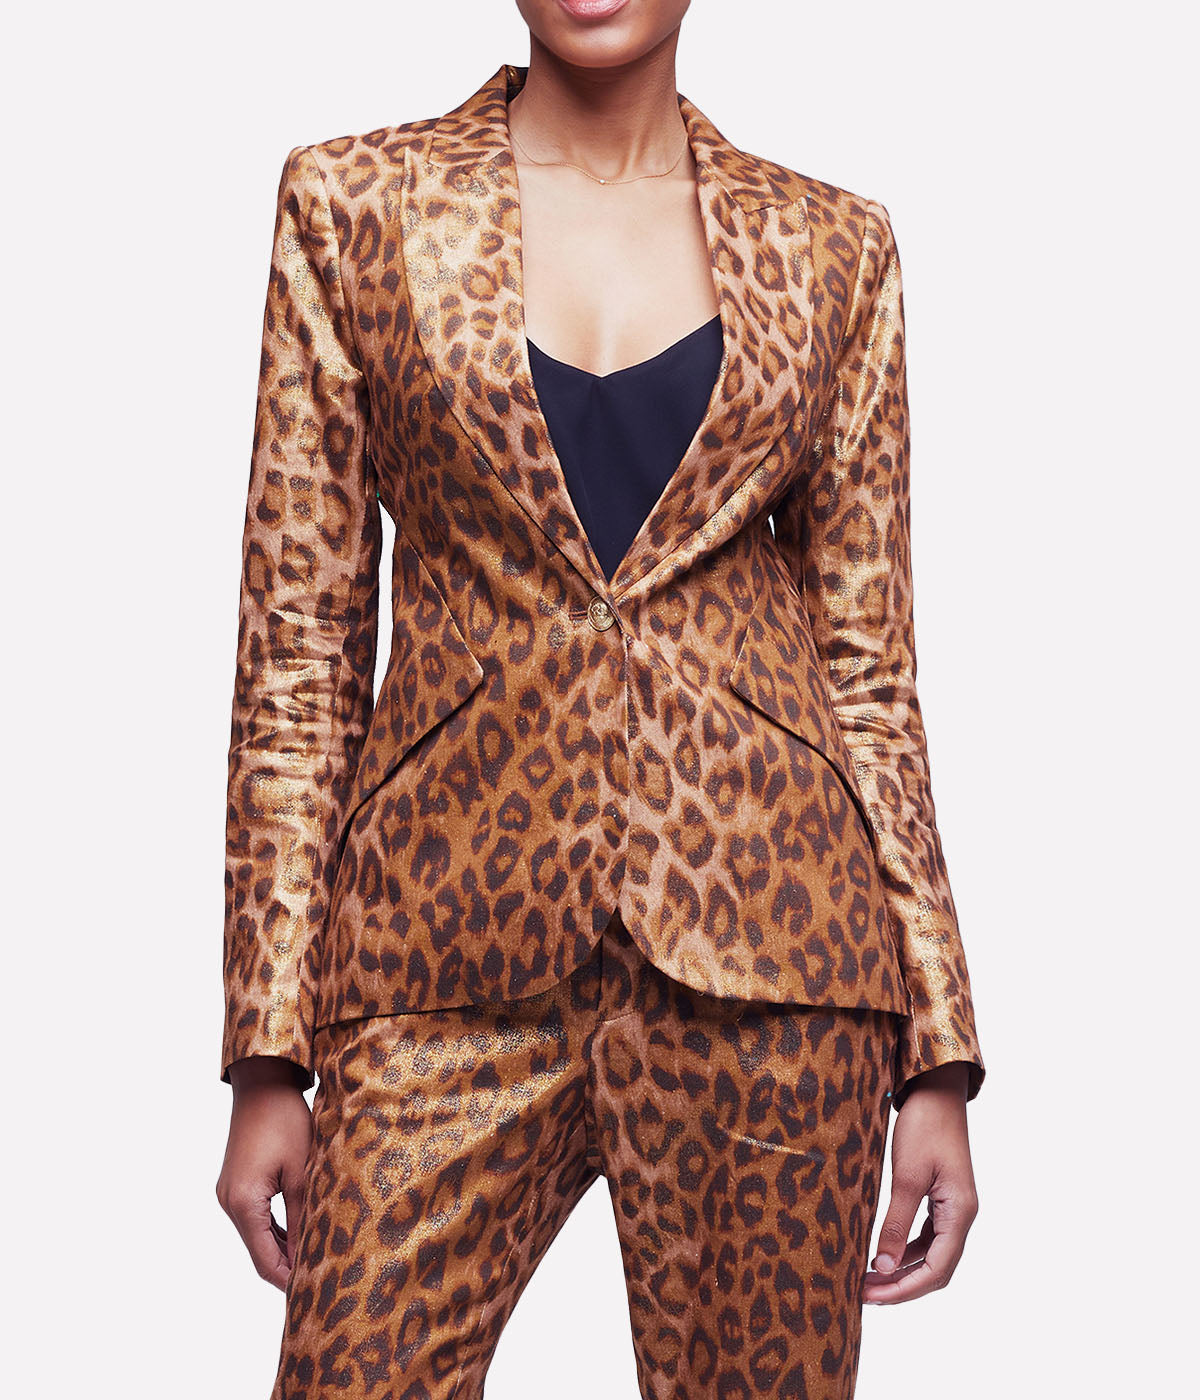 Chamberlain Blazer in Gold Multi & Cheetah